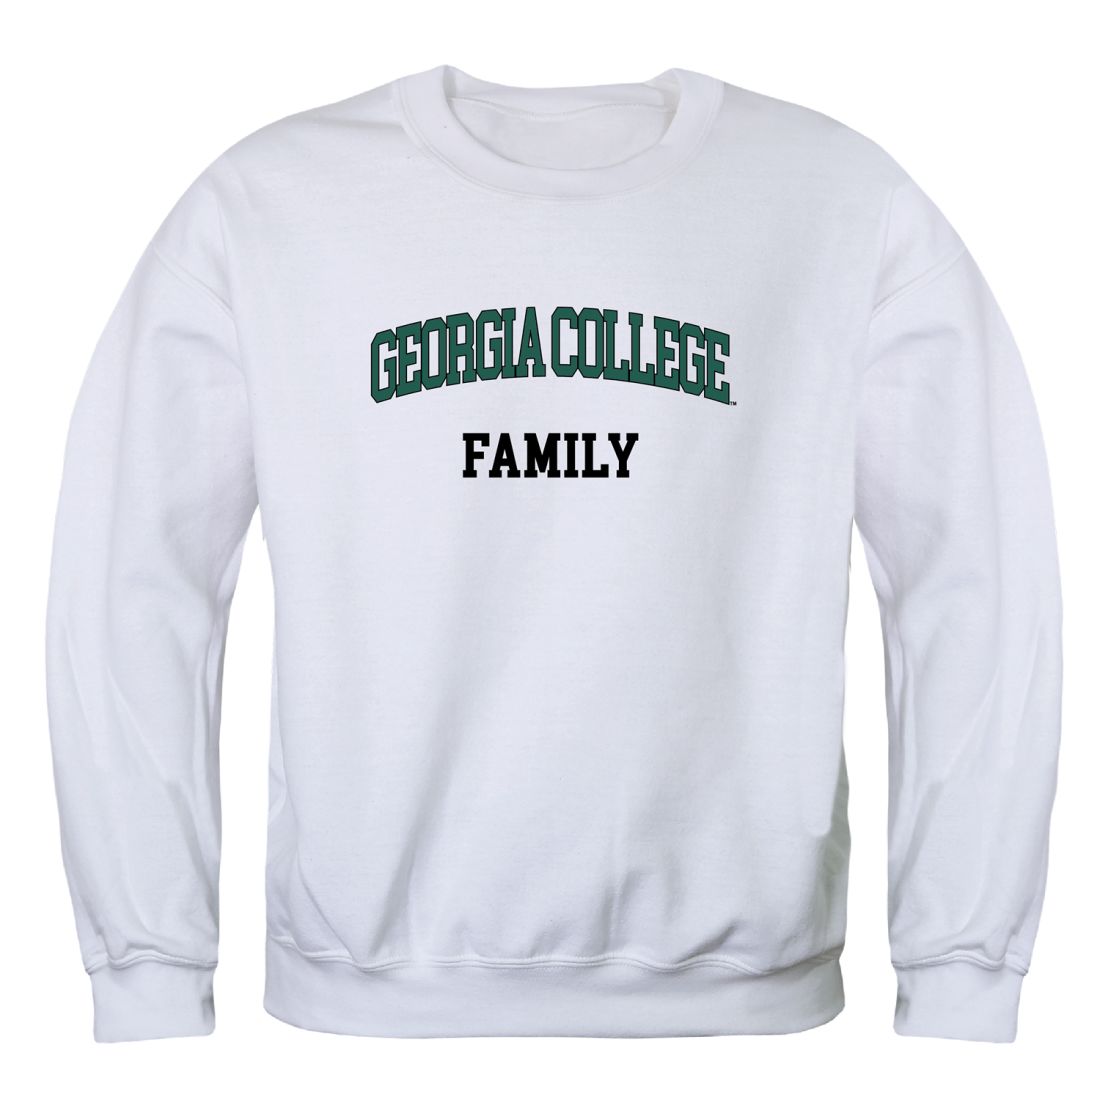 Georgia-College-and-State-University-Bobcats-Family-Fleece-Crewneck-Pullover-Sweatshirt